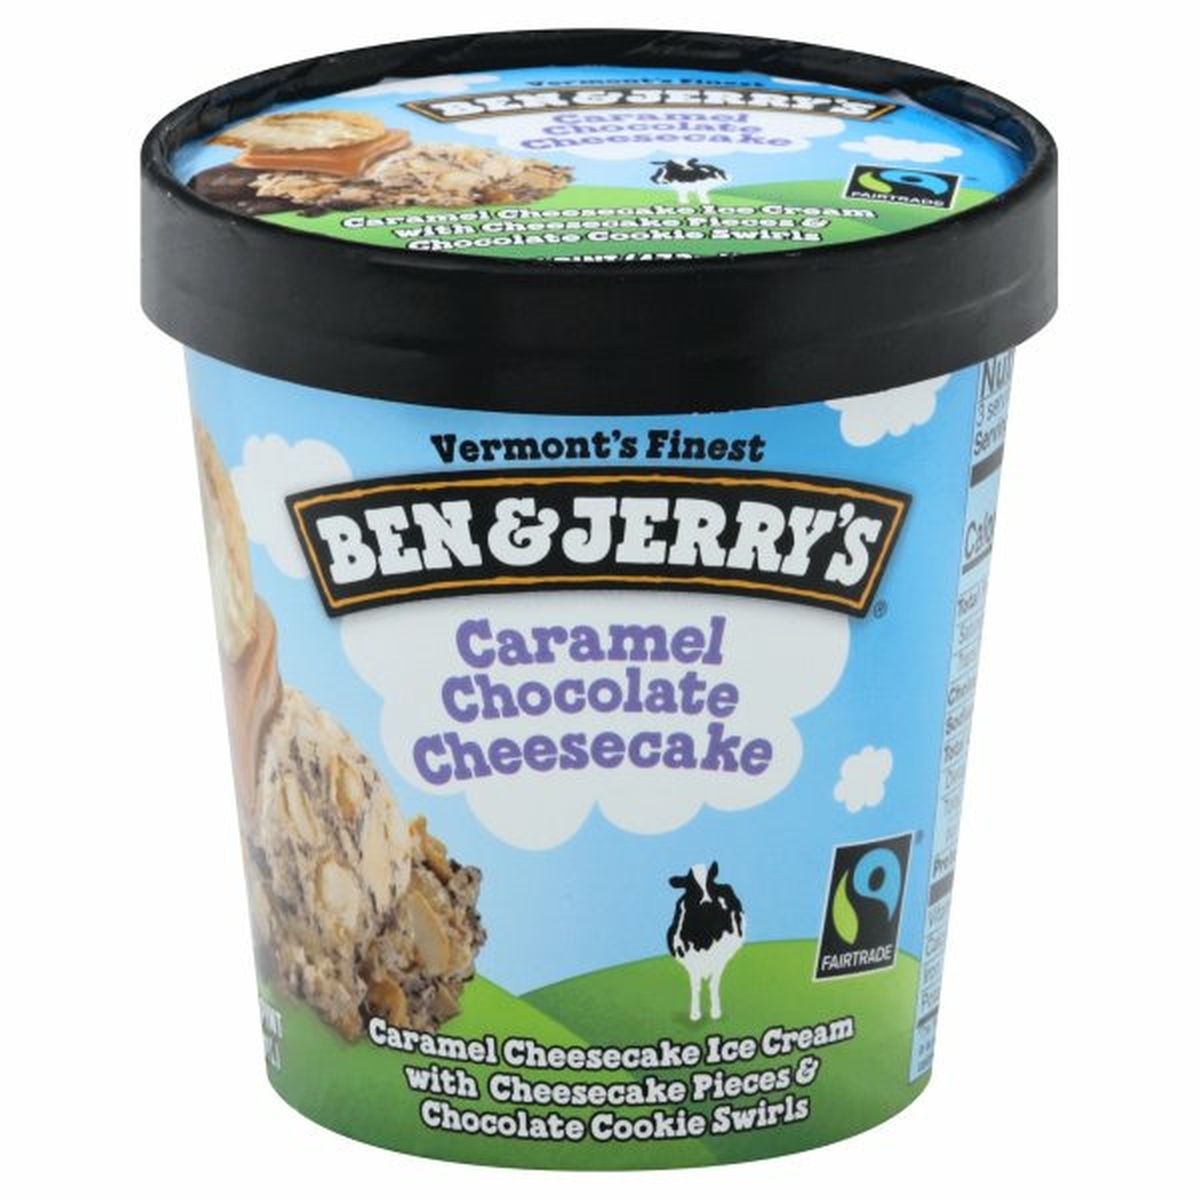 Calories in Ben & Jerry's Ice Cream, Caramel Chocolate Cheesecake